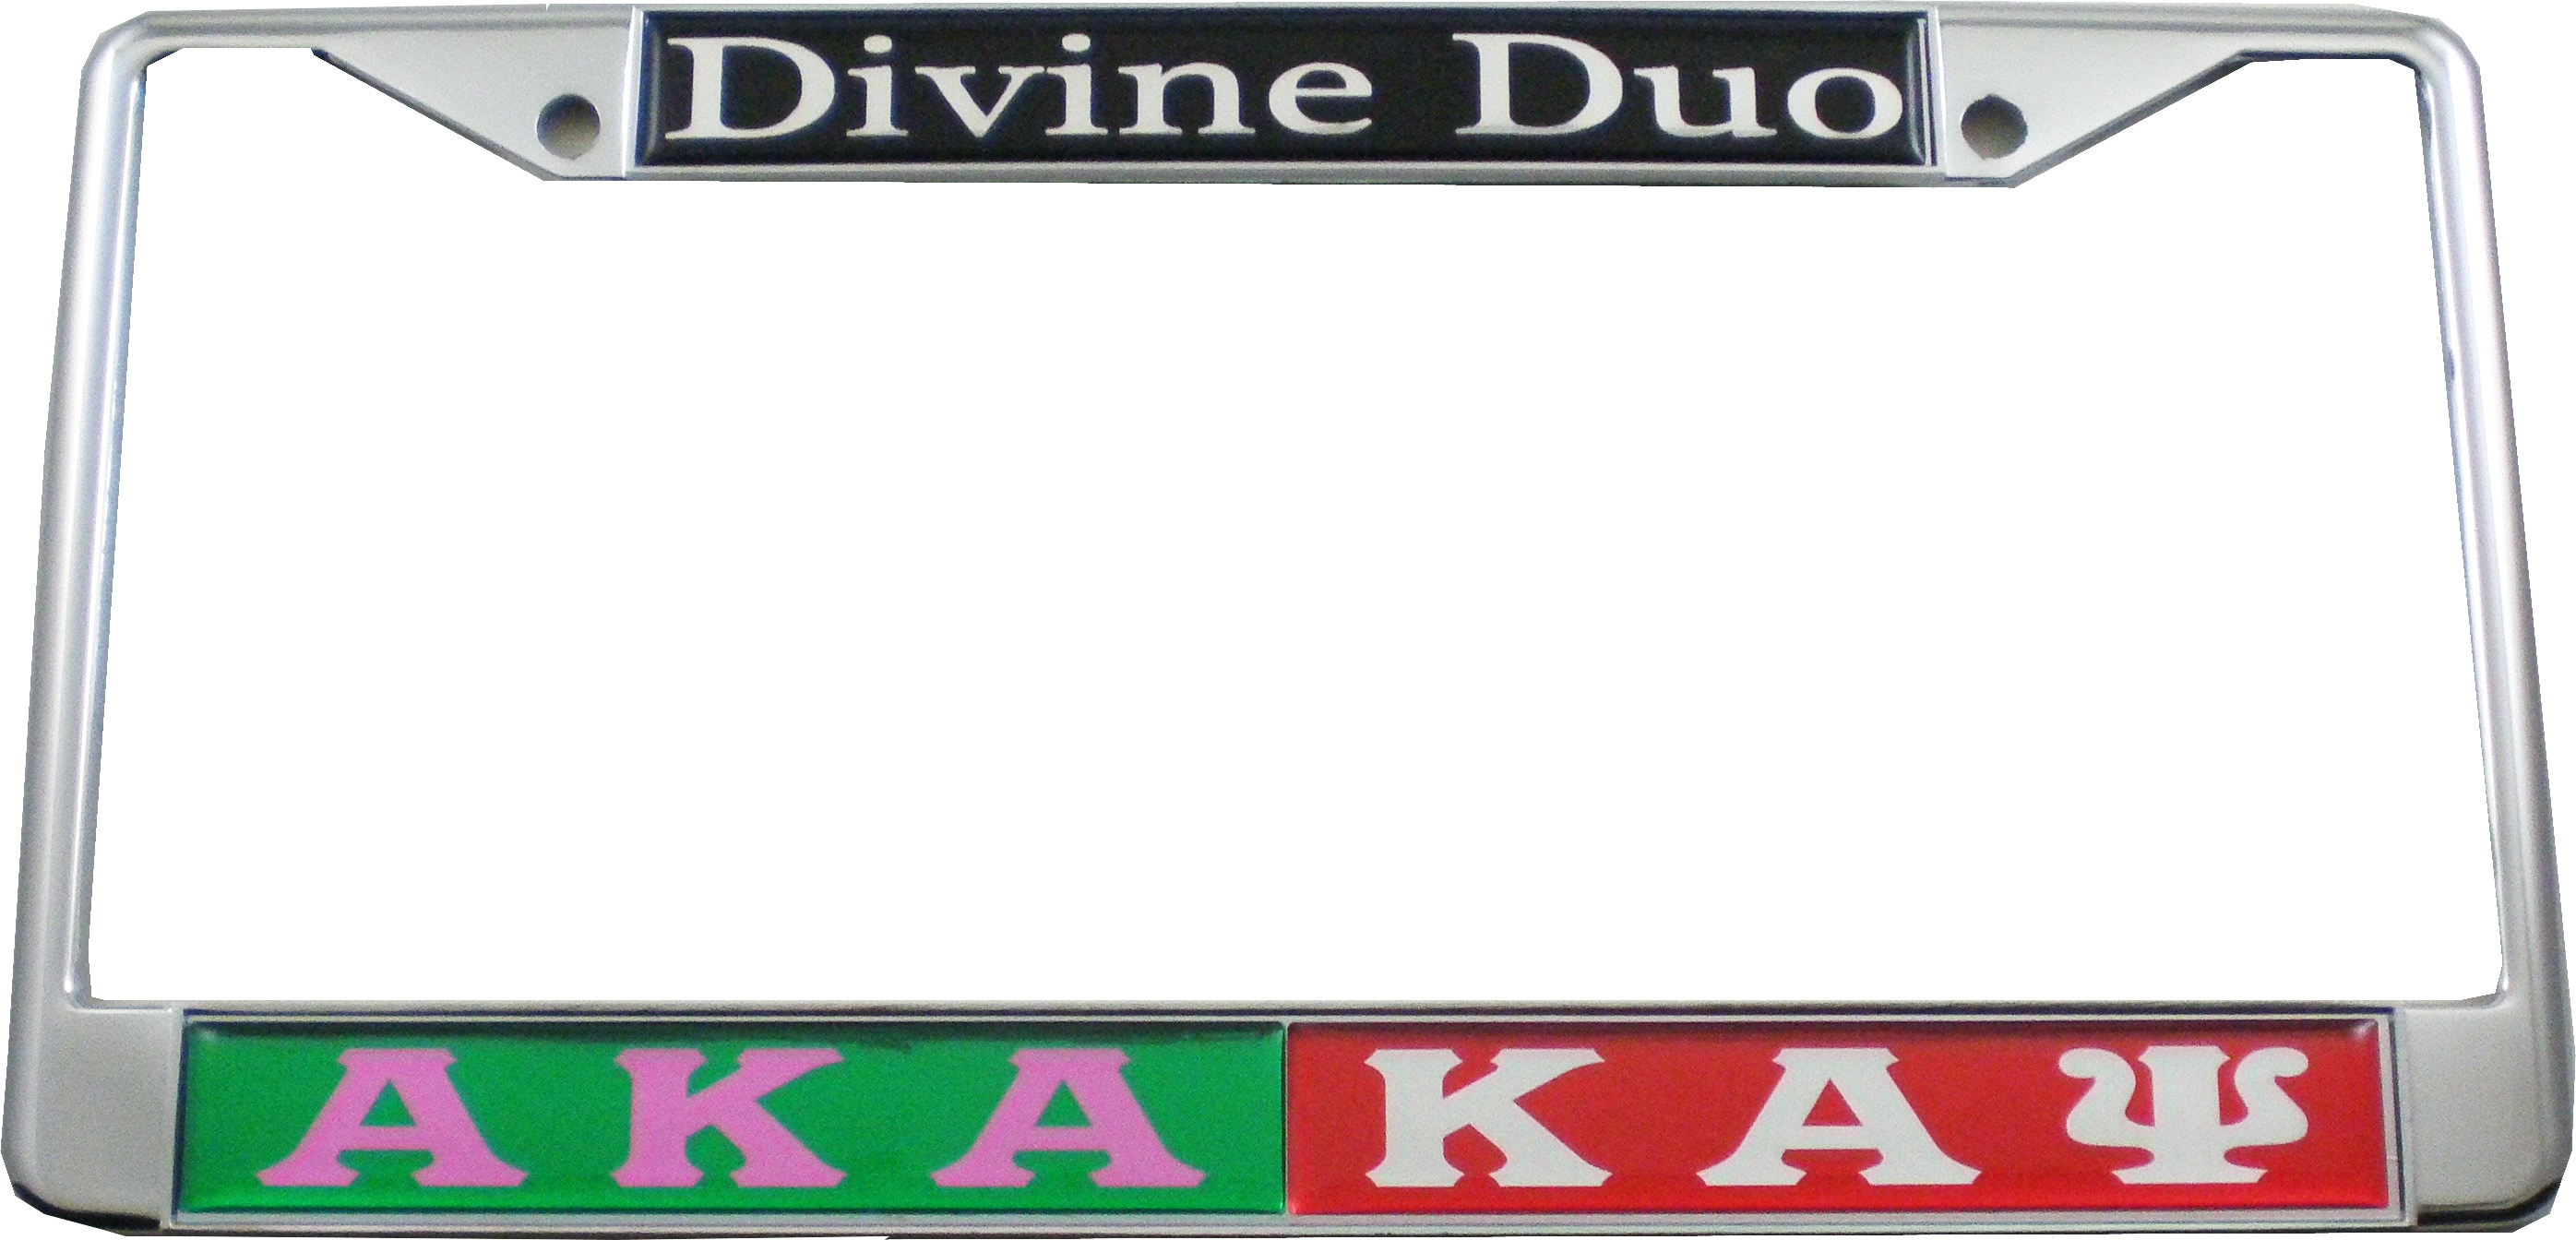 Alpha Kappa Alpha + Kappa Alpha Psi Divine Duo Split License Plate Frame The Cultural Exchange